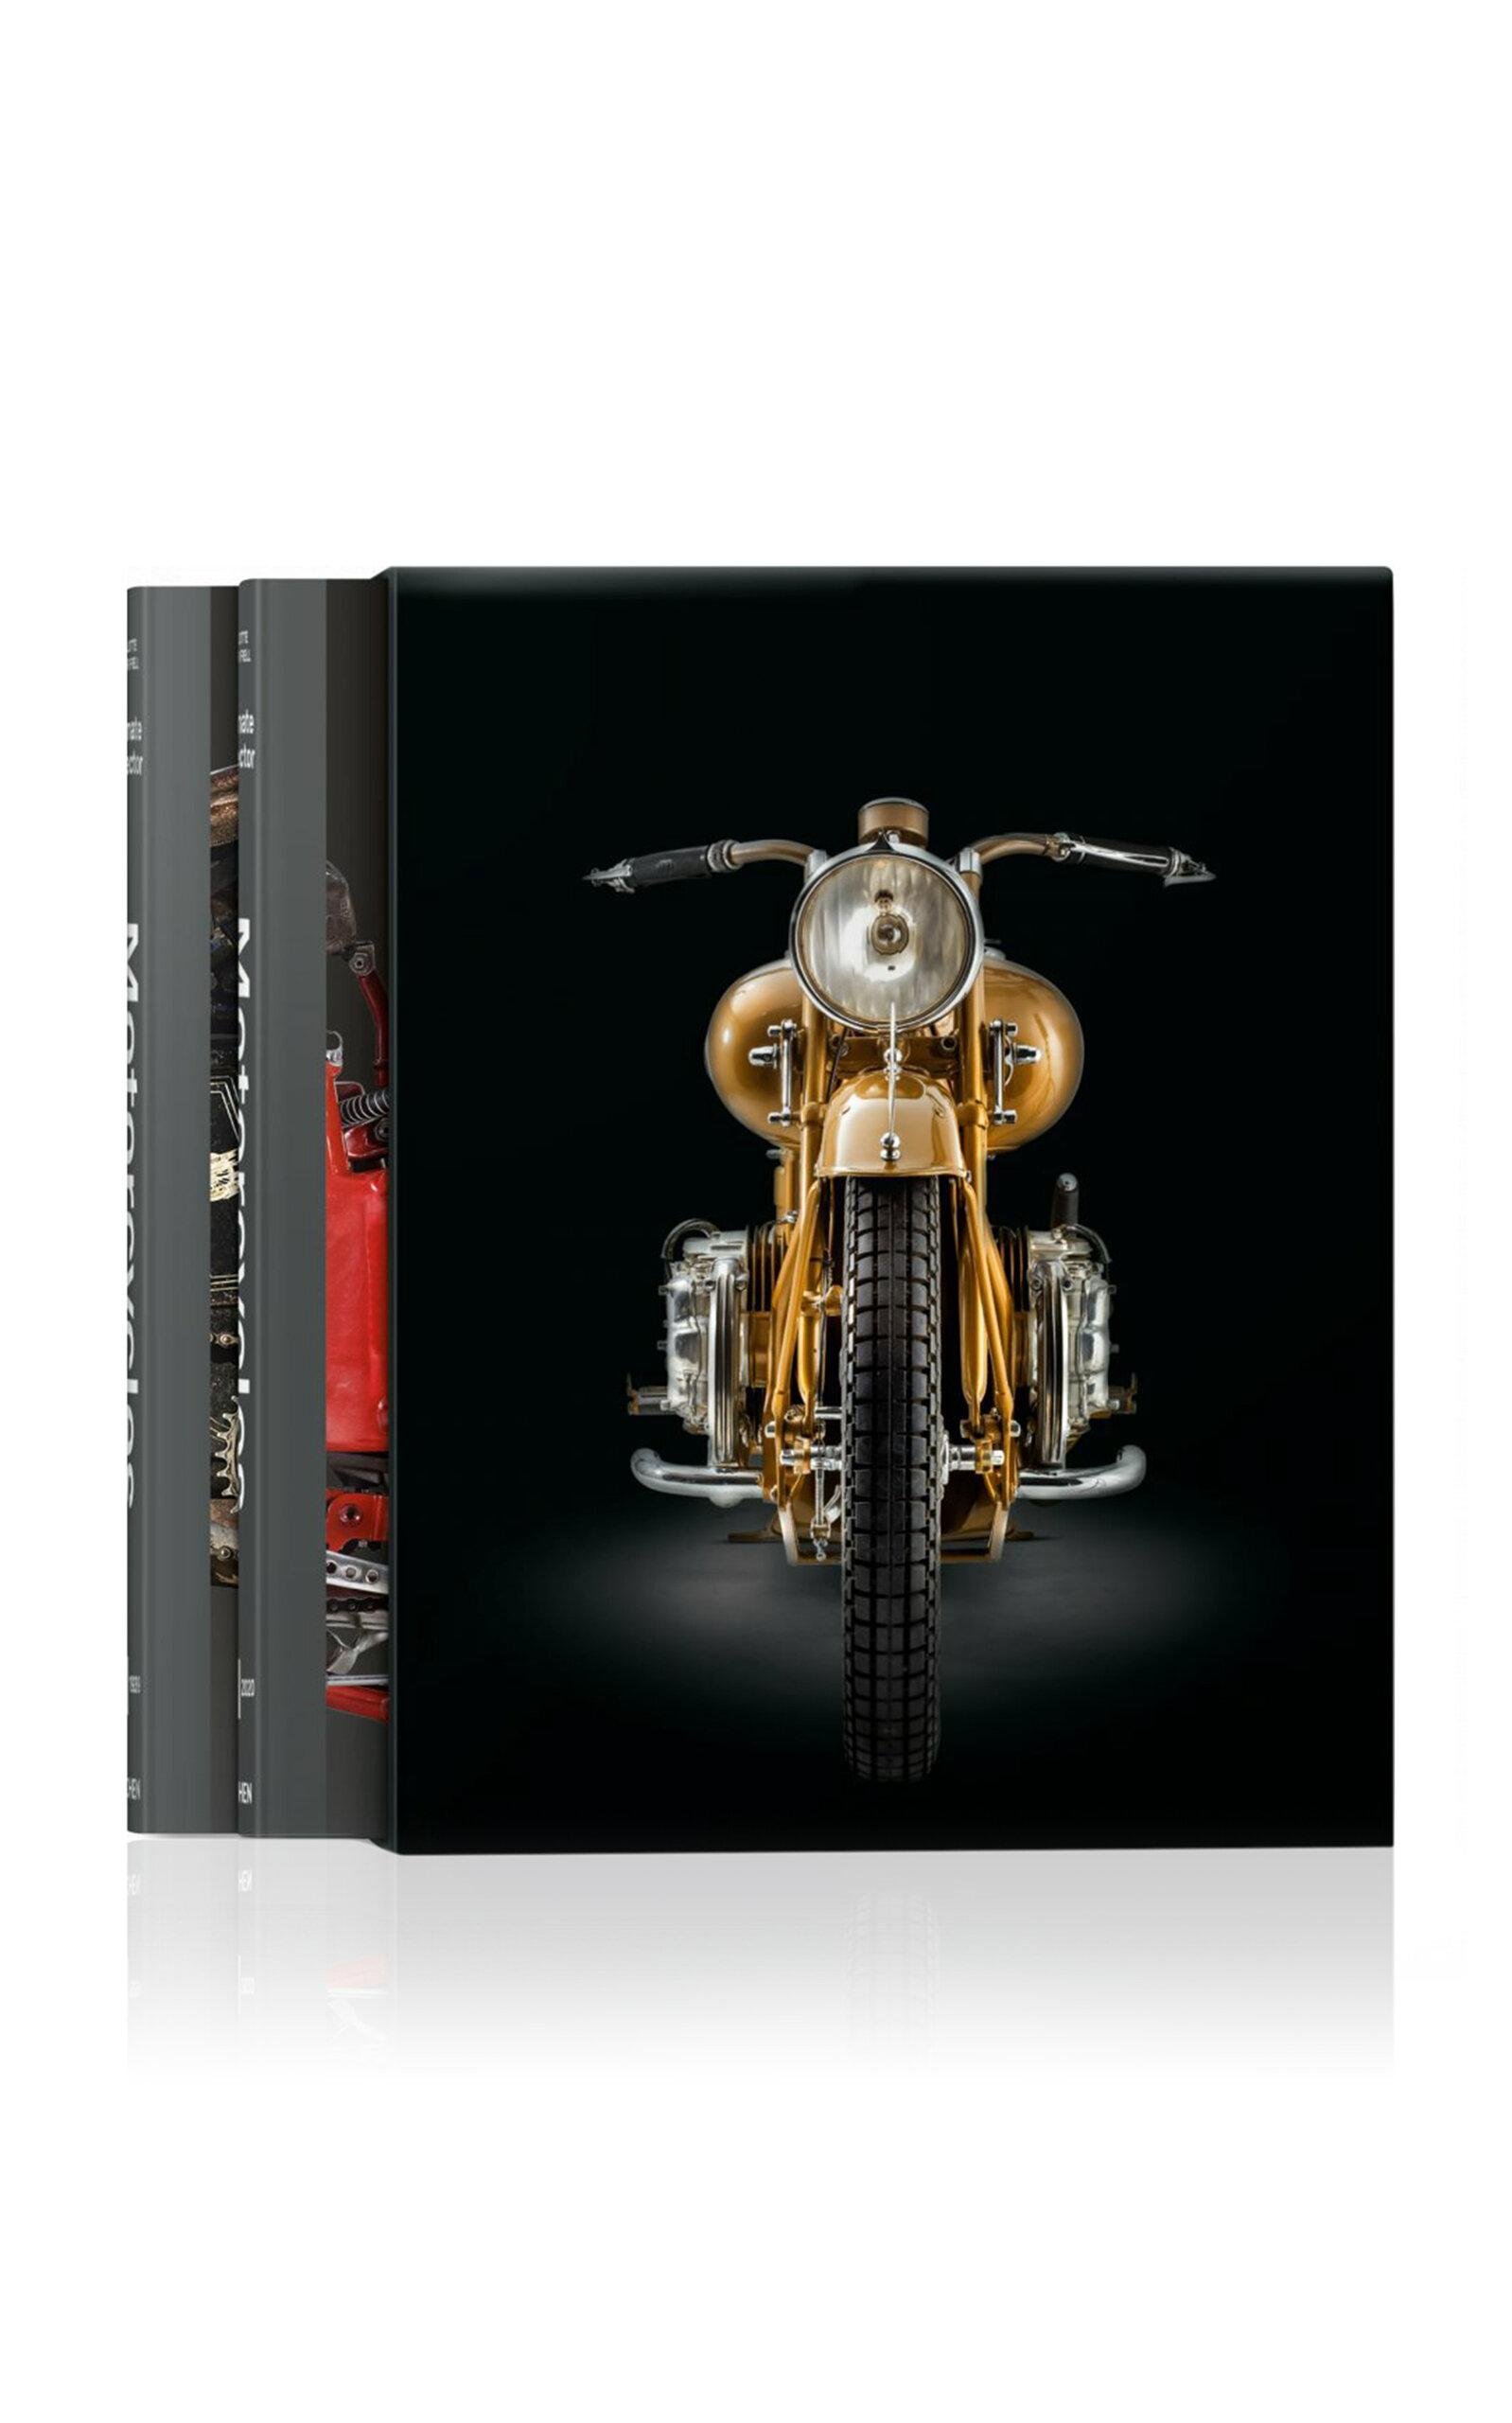 Taschen - Ultimate Collector Motorcycles Hardcover Book Set - Multi - Moda Operandi by TASCHEN